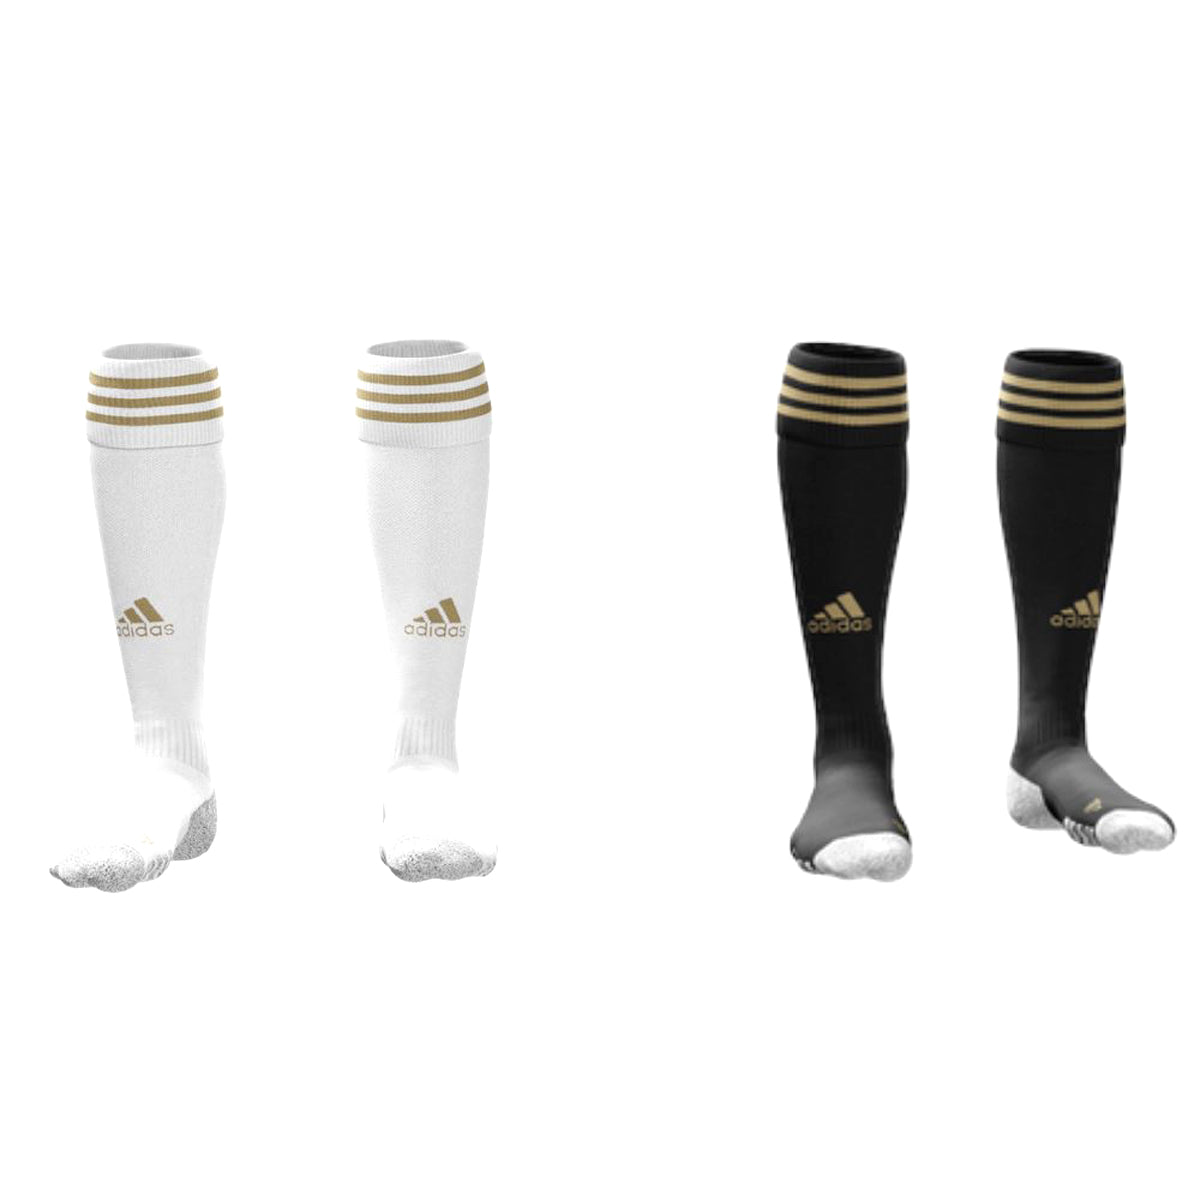 Pearl City Soccer Club Socks | Black and White Soccer Socks Adidas 